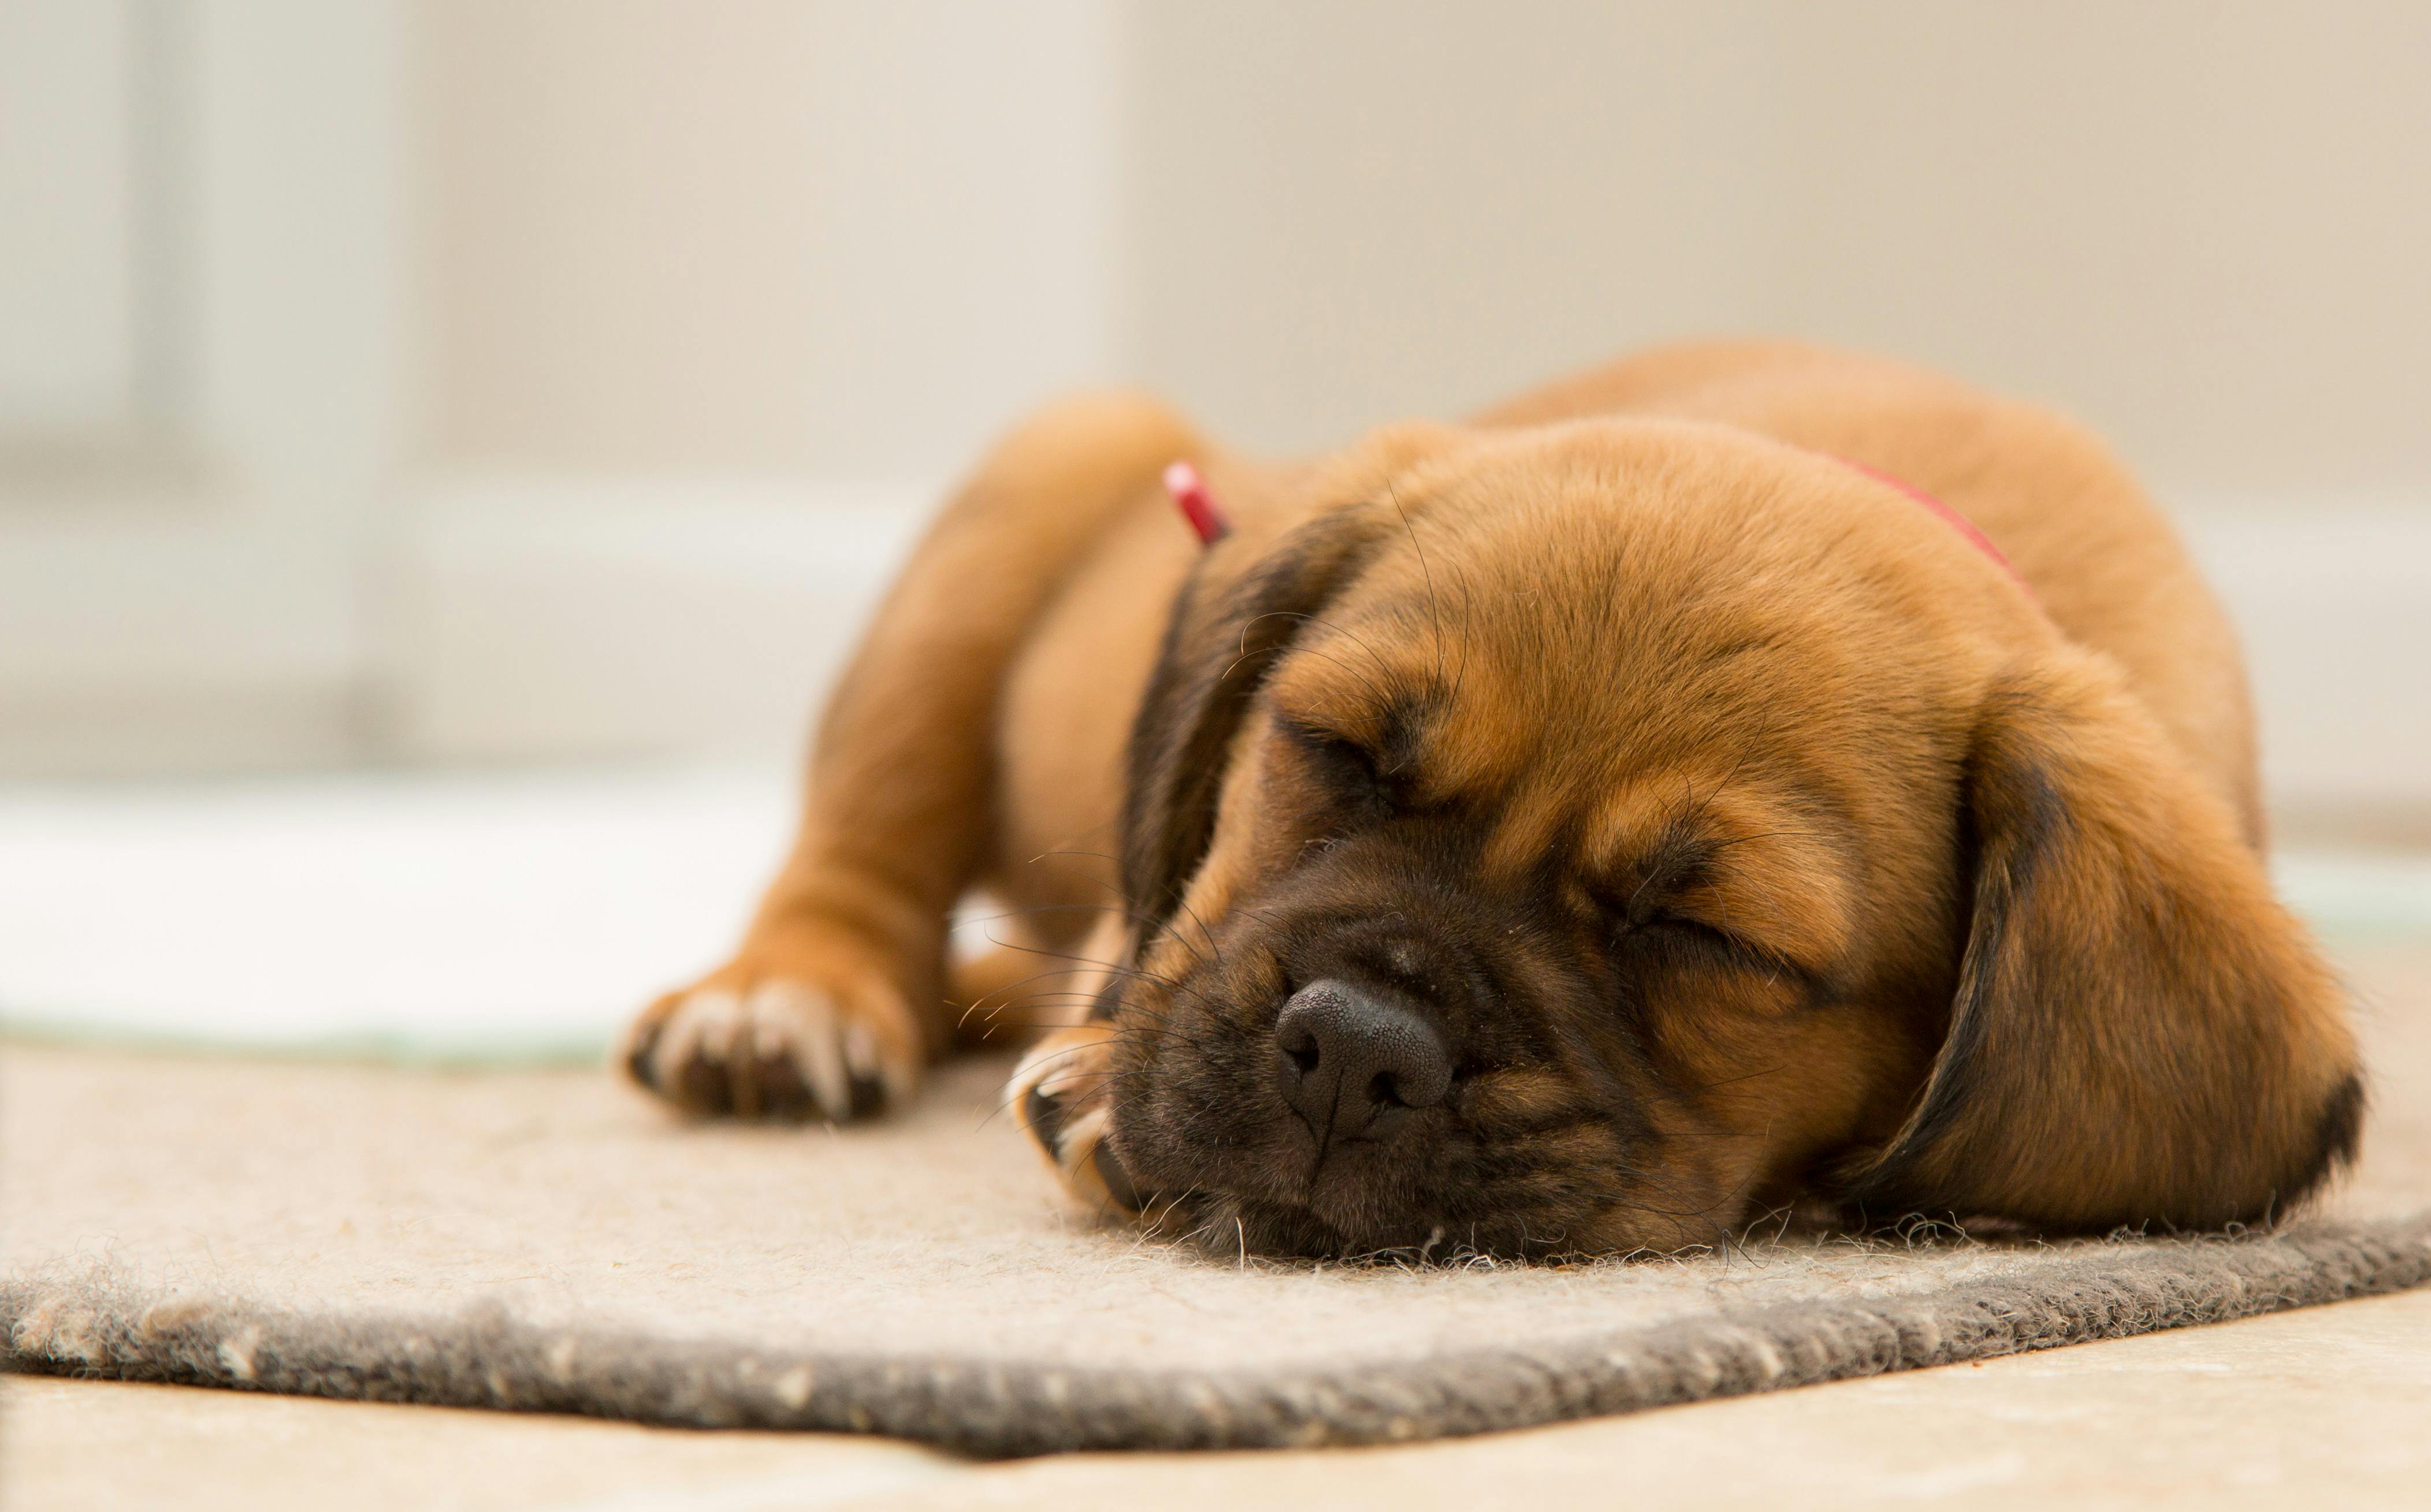 Dog Sleeping Wallpaper Photos, Download The BEST Free Dog Sleeping ...